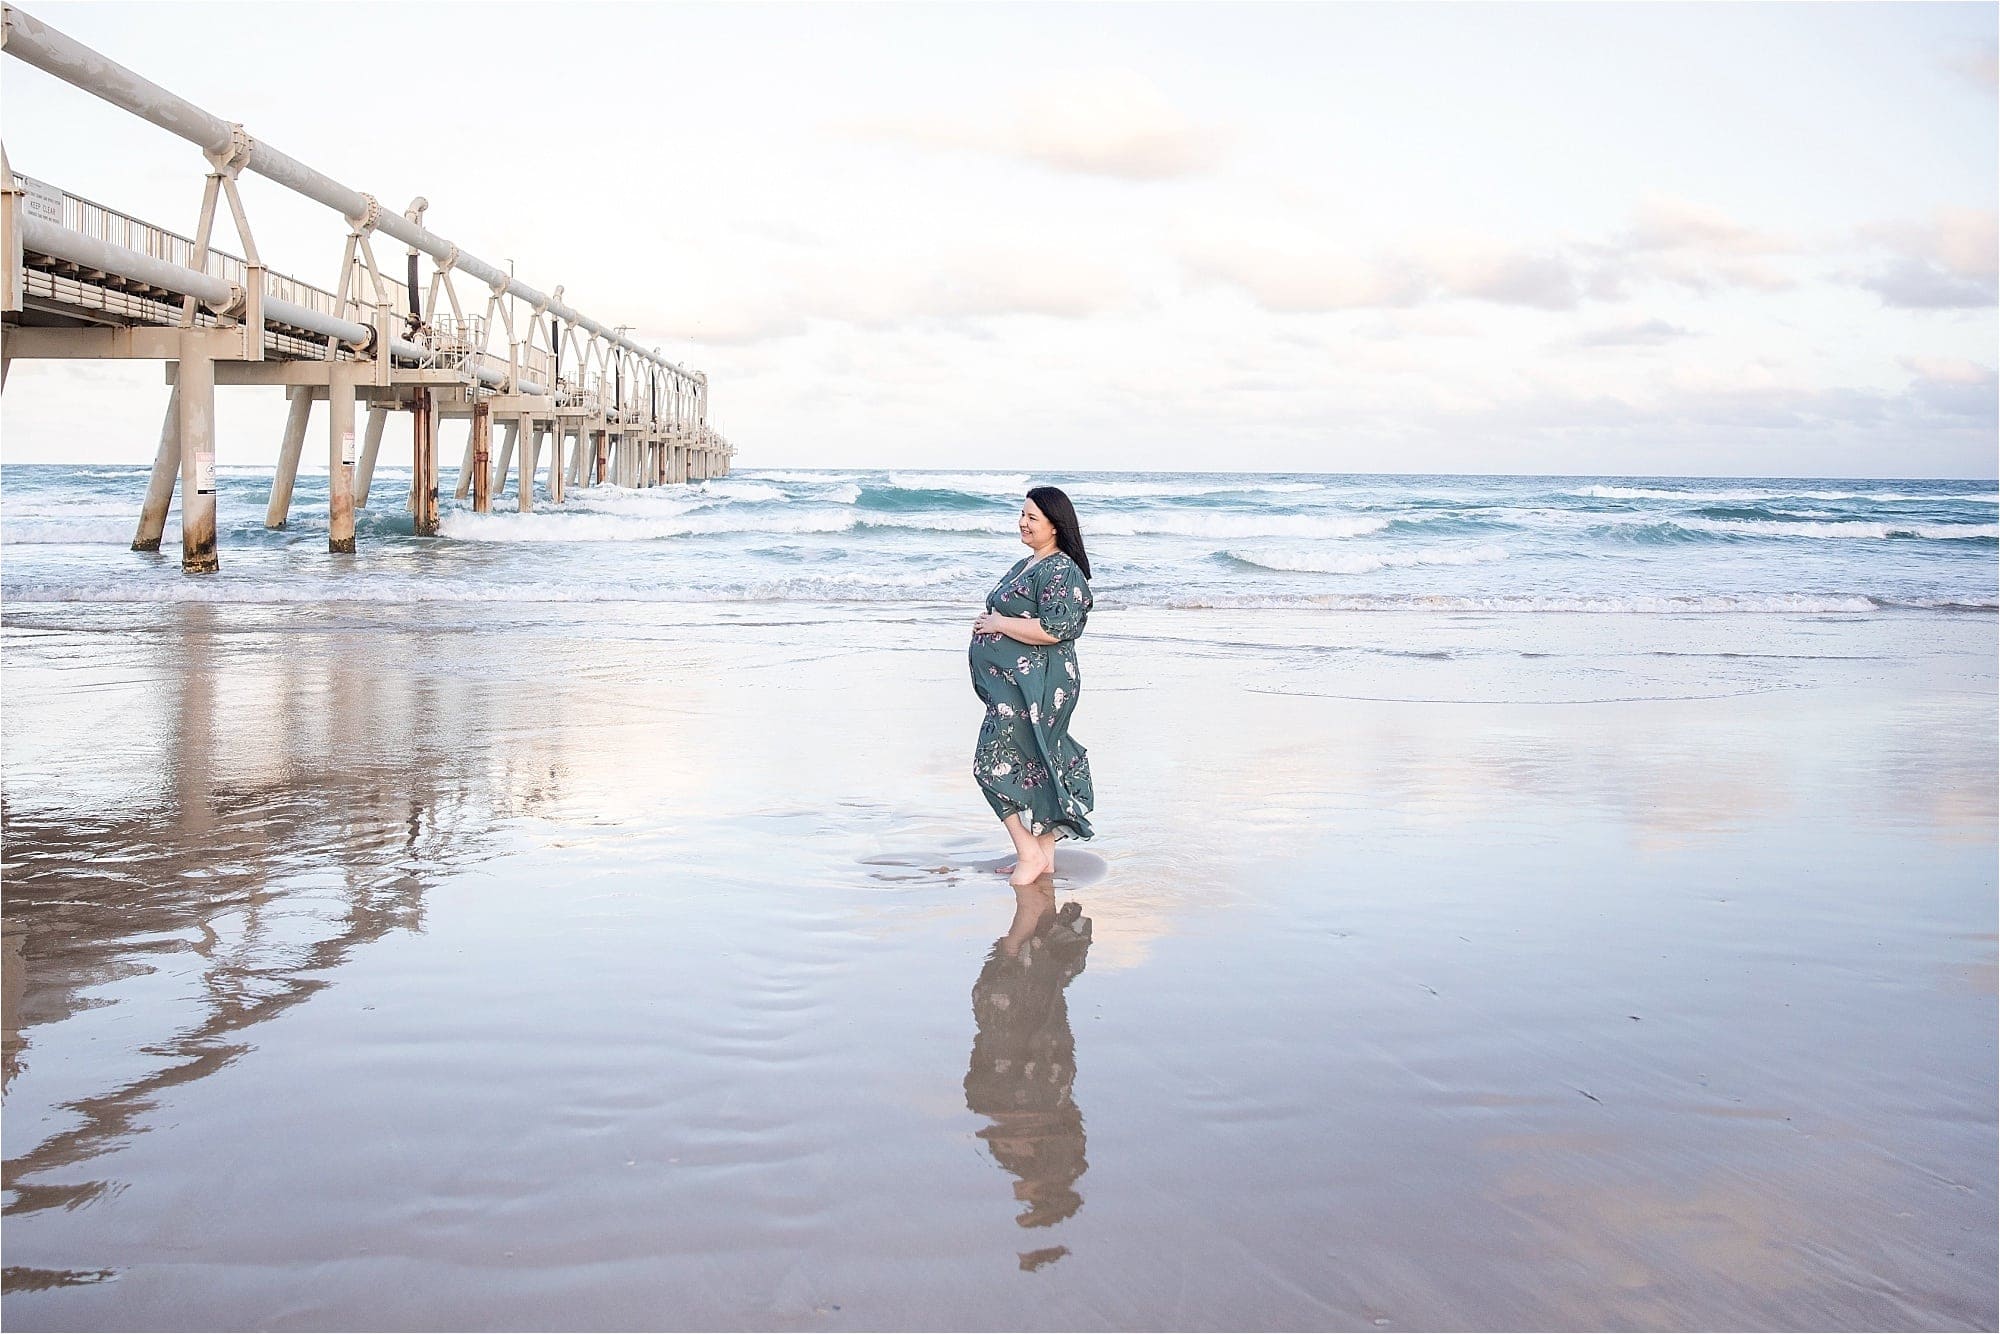 Gold Coast Maternity Shoot Bec Pattinson Photography